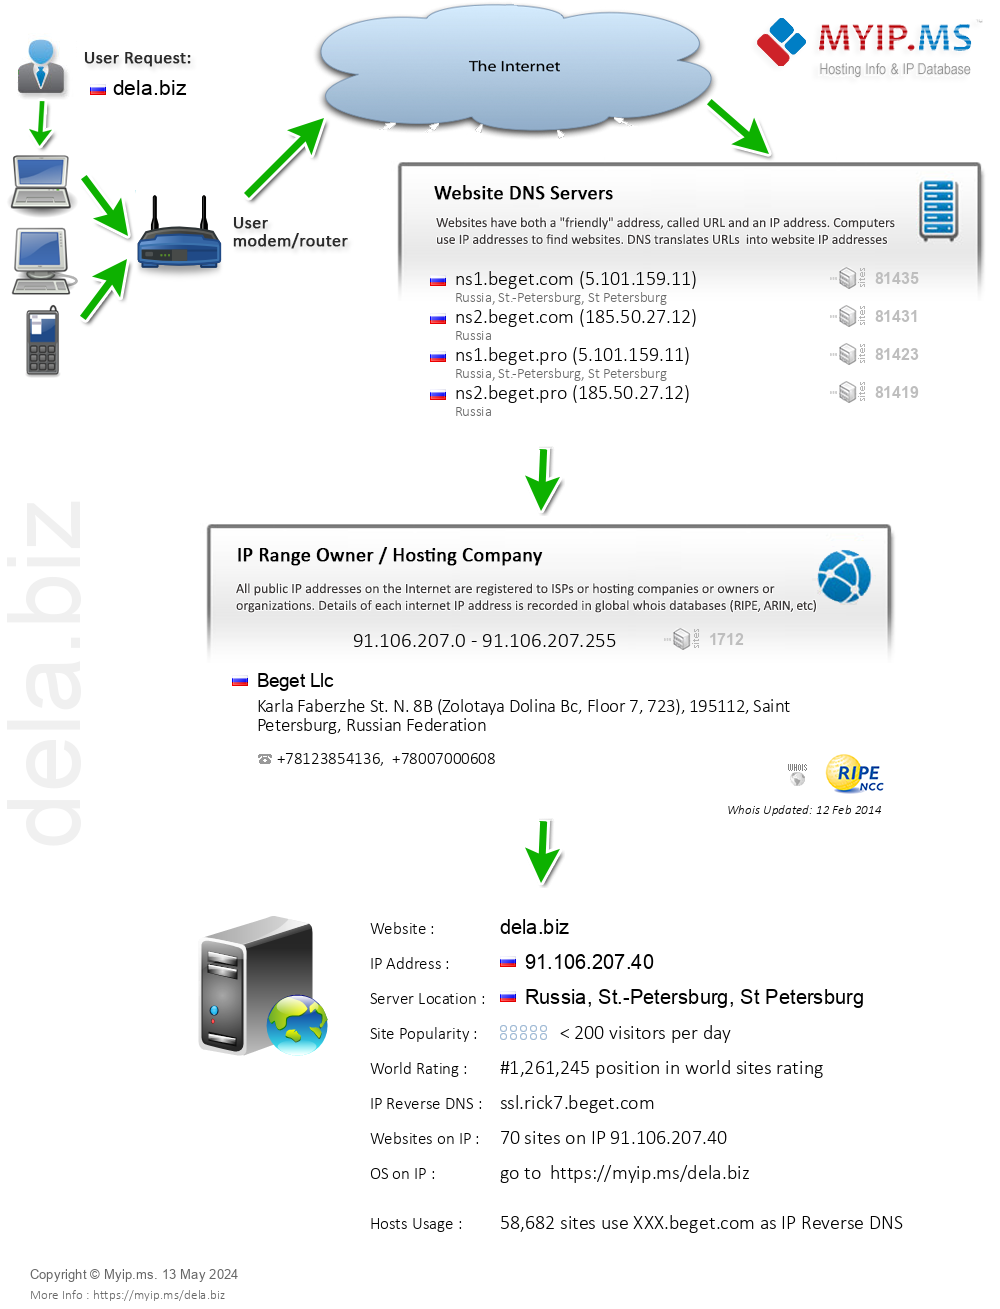 Dela.biz - Website Hosting Visual IP Diagram